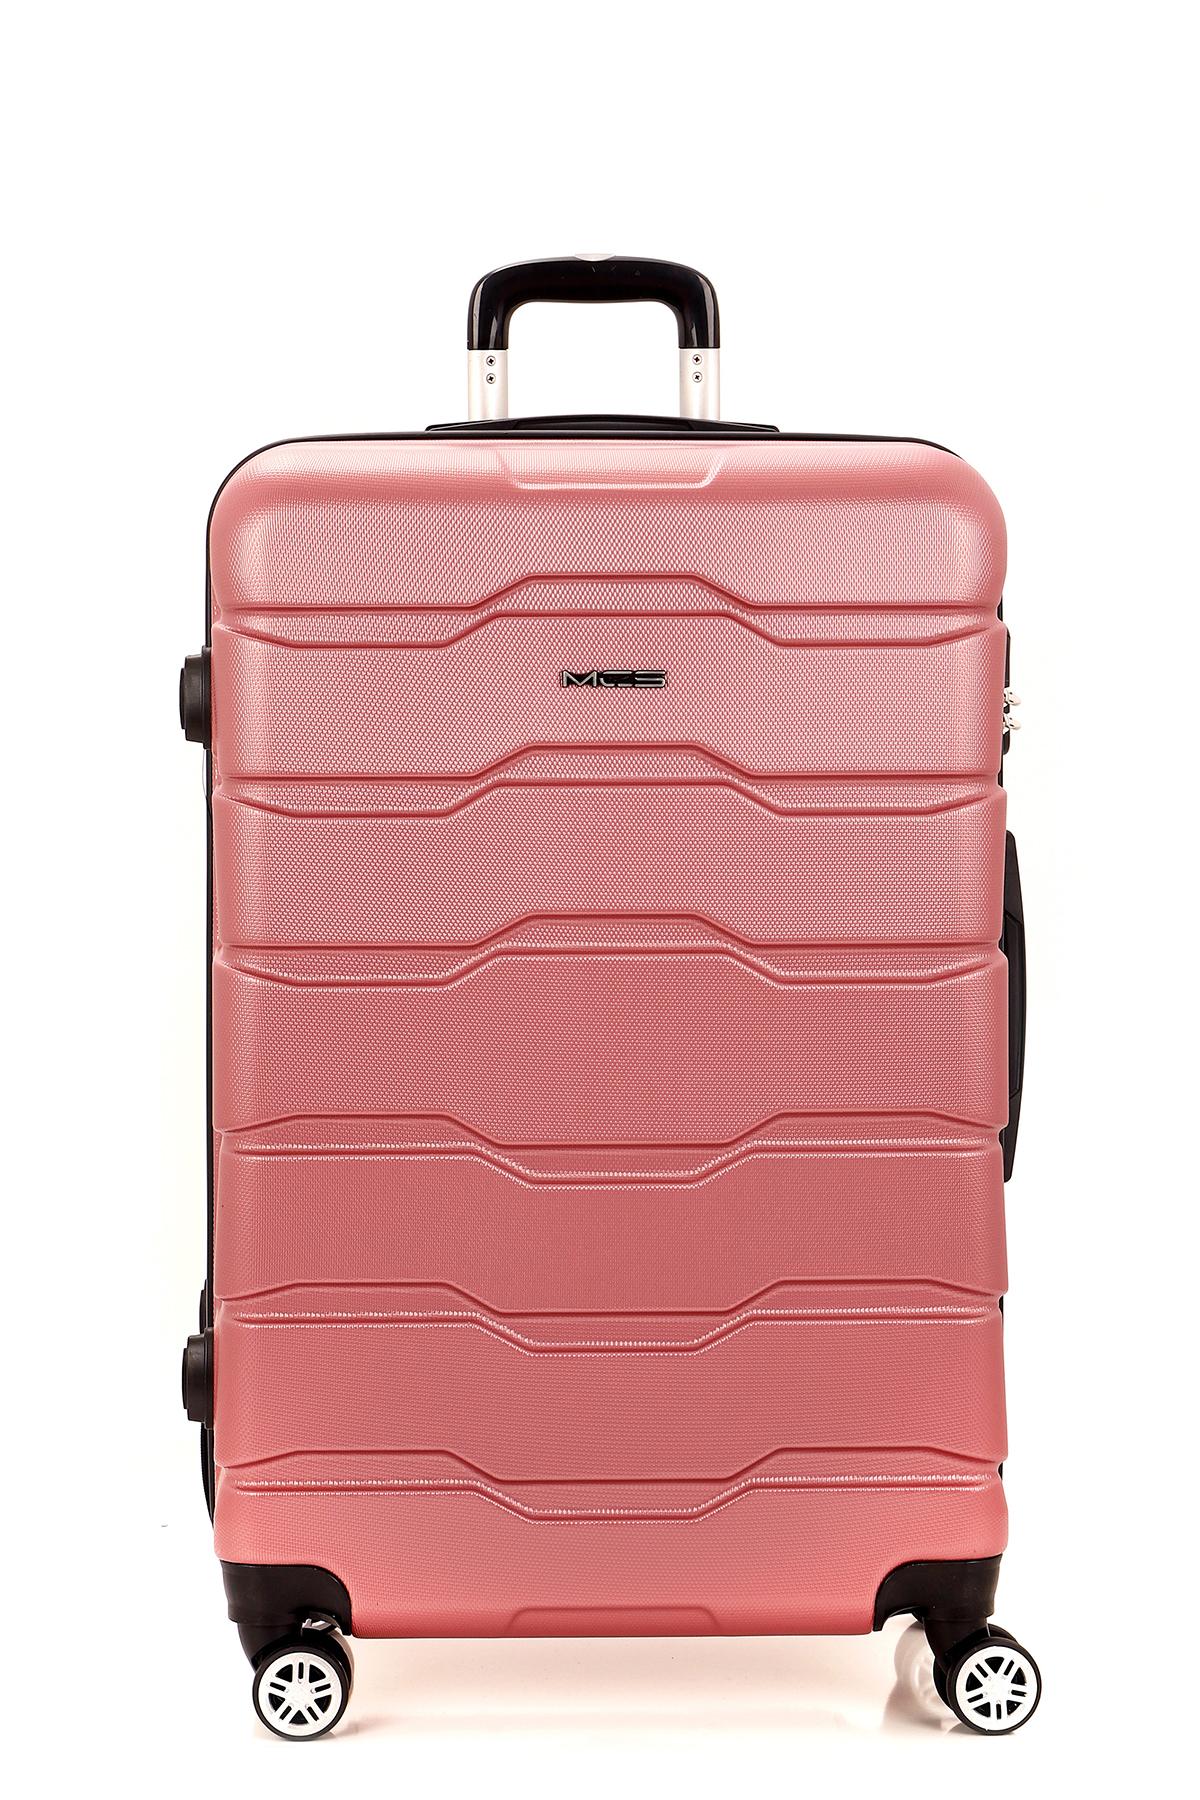 MCS Kofer V302 roze L 76cm